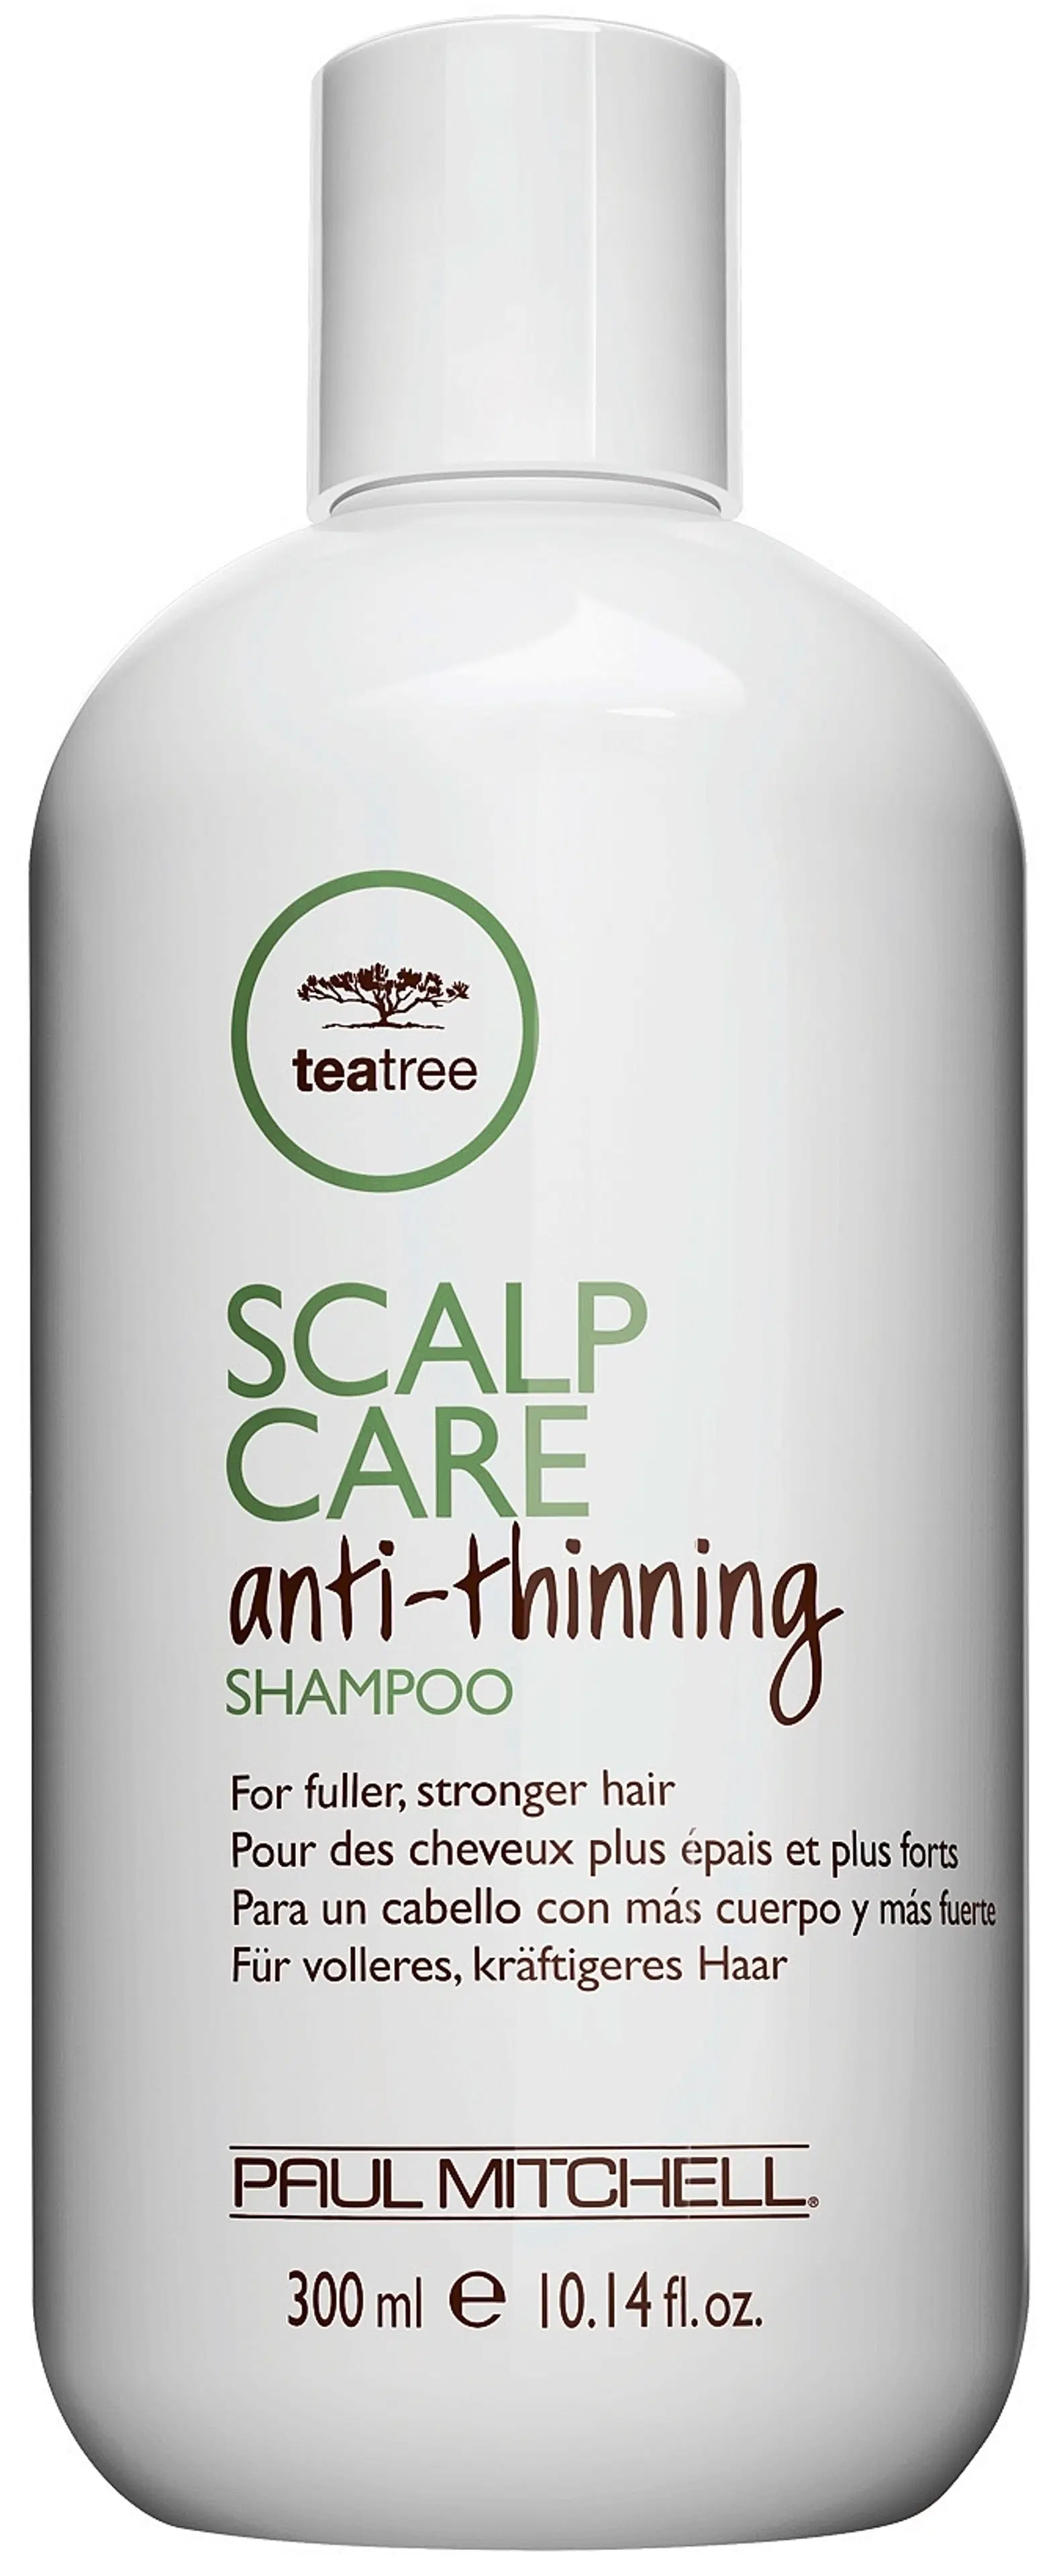 Paul Mitchell Tea Tree Scalp Care shampoo 300 ml